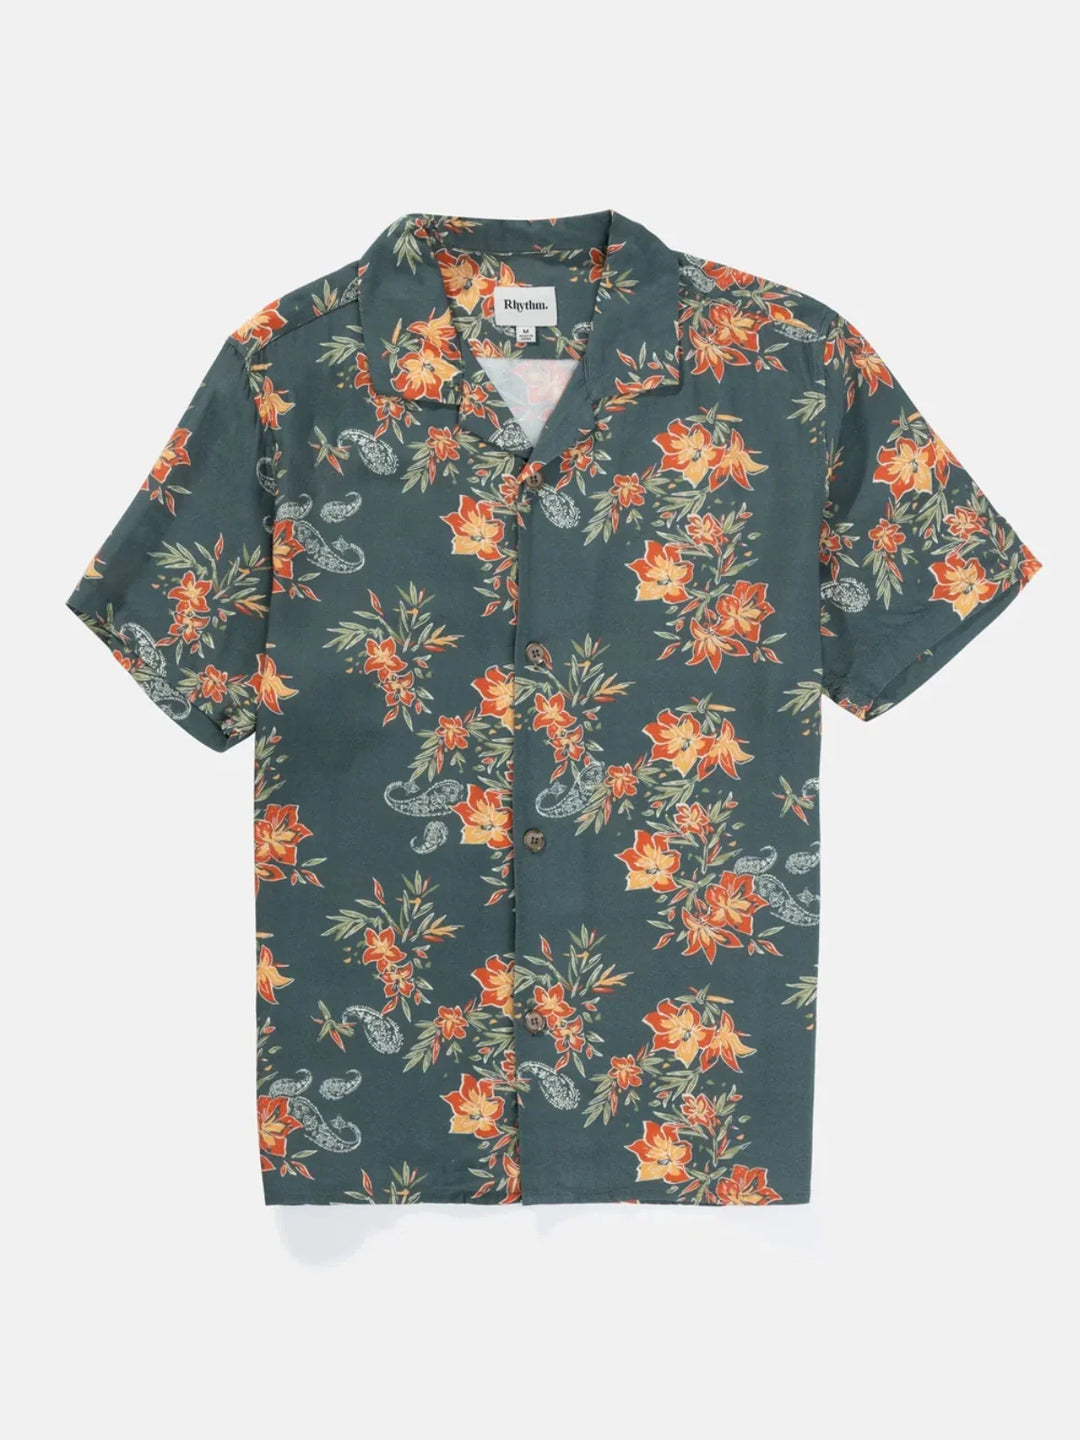 Rhythm Tropical Paisley Cuban Short Sleeve Shirt - PINE - Sun Diego Boardshop